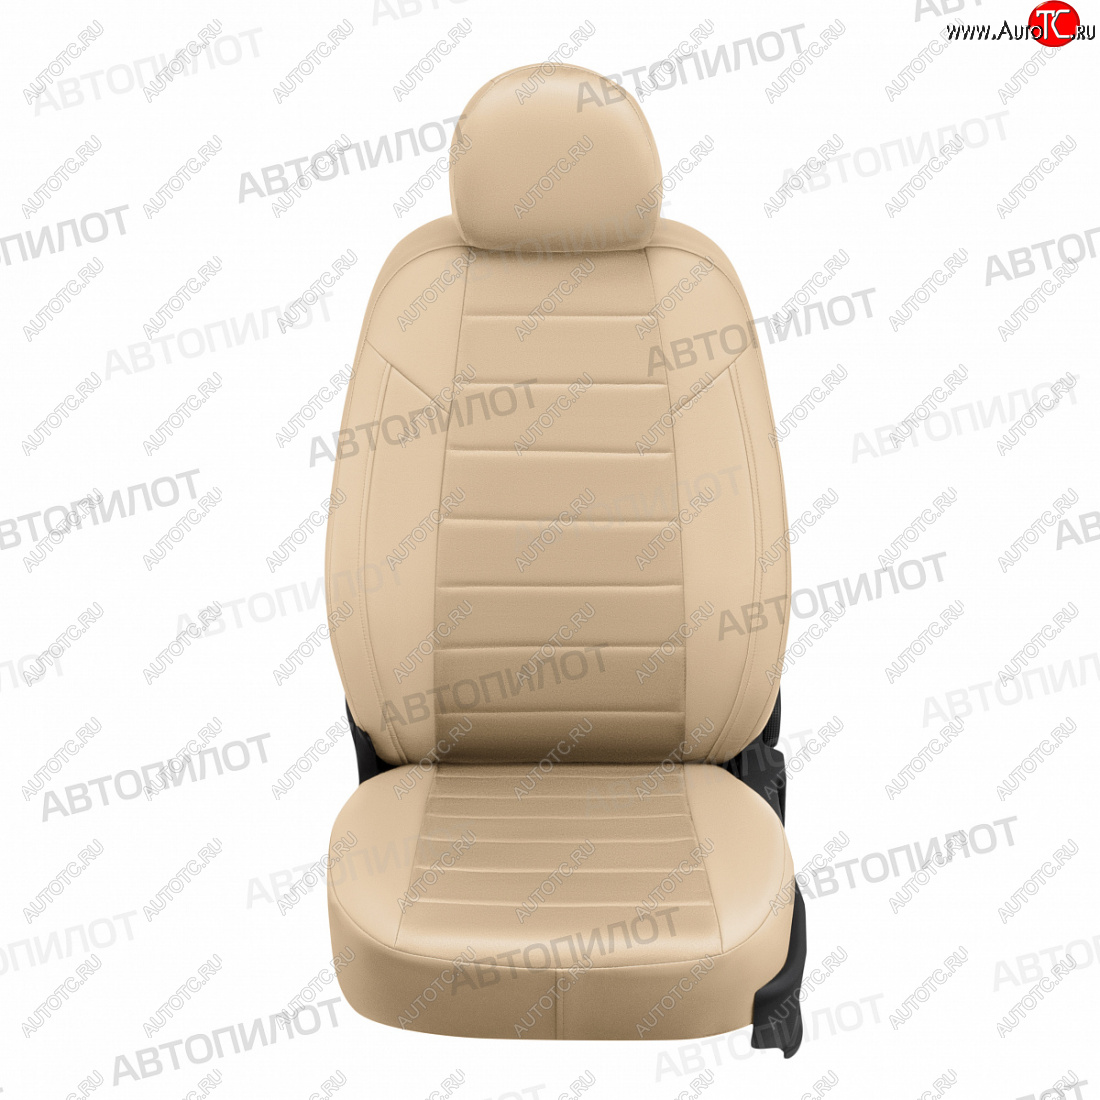 13 849 р. Чехлы сидений (экокожа/алькантара) Автопилот Hyundai Sonata YF (2009-2014) (бежевый)